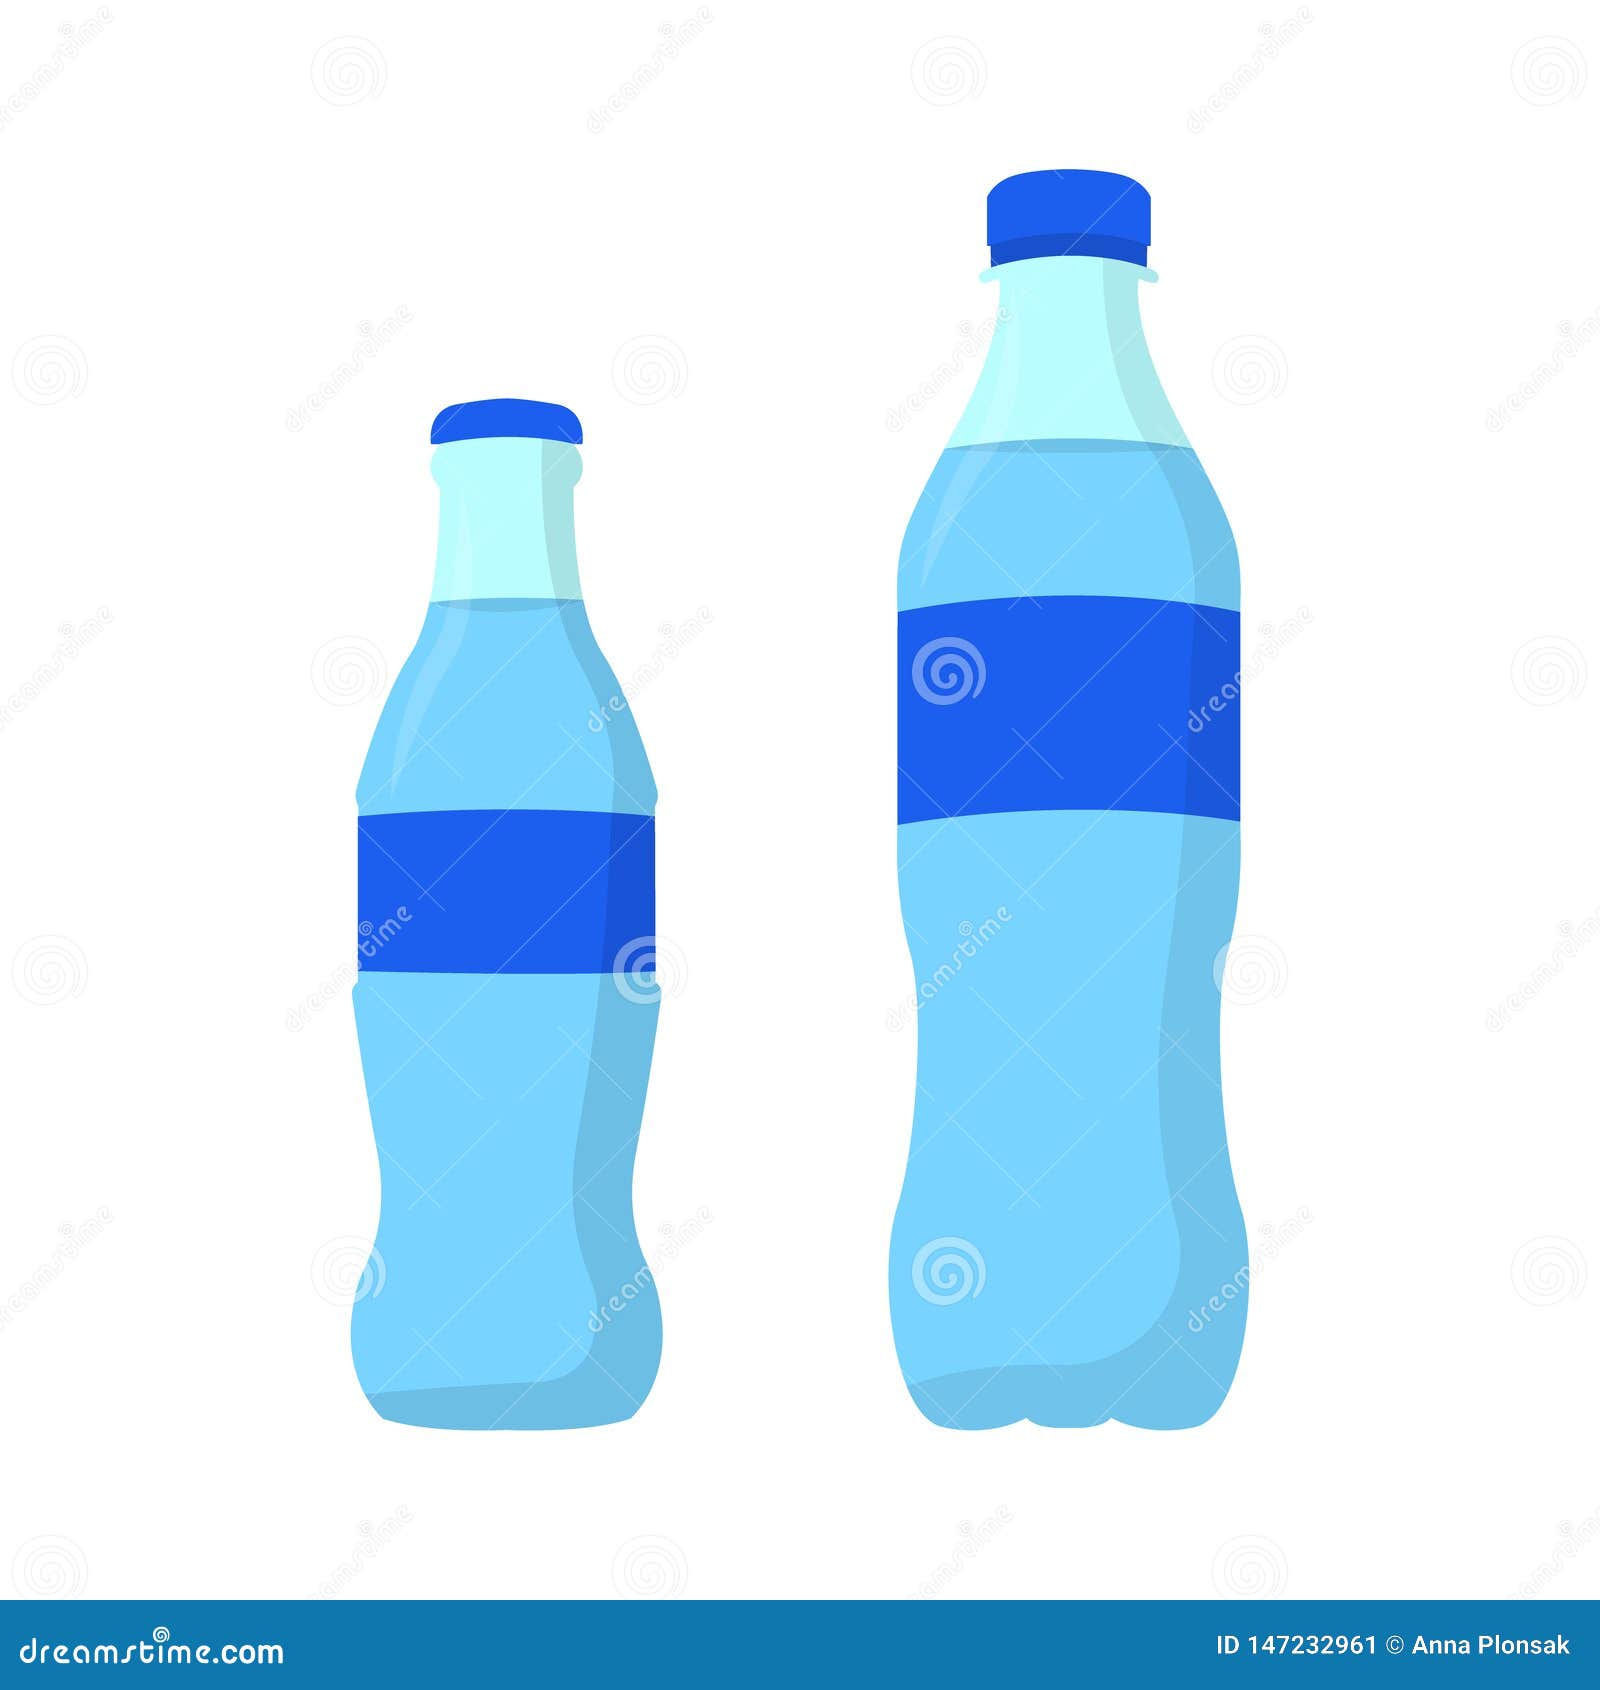 https://thumbs.dreamstime.com/z/soda-mineral-water-plastic-glass-bottle-flat-design-147232961.jpg